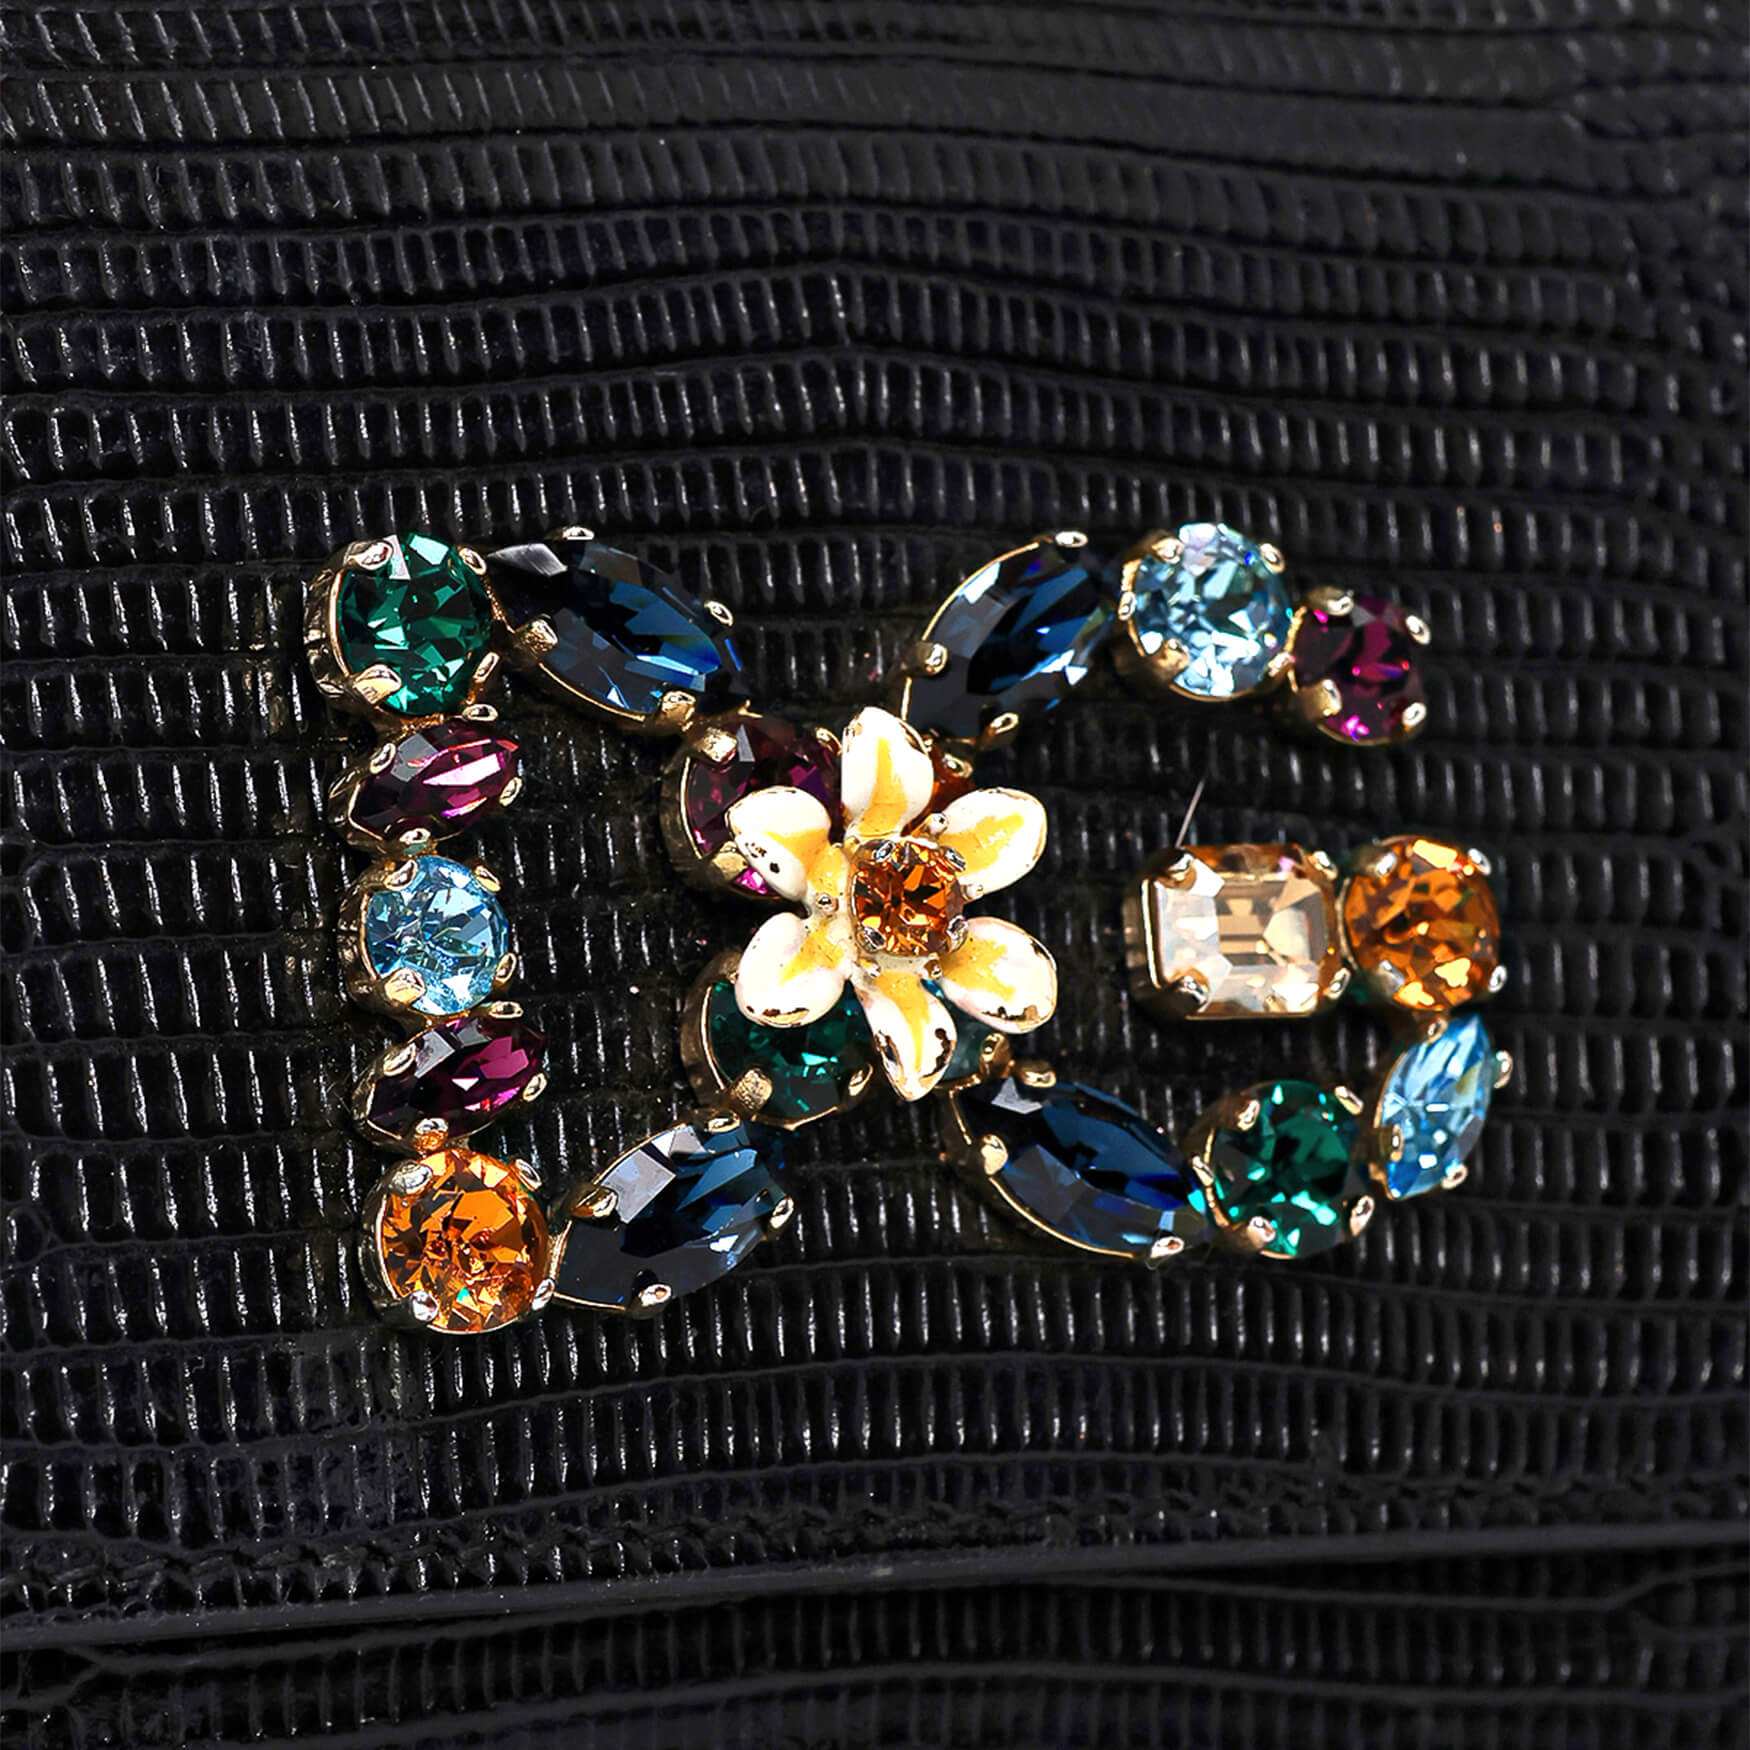 Dolce&Gabbana - Black Leather DG Buckle Detail Mini Sicily Bag